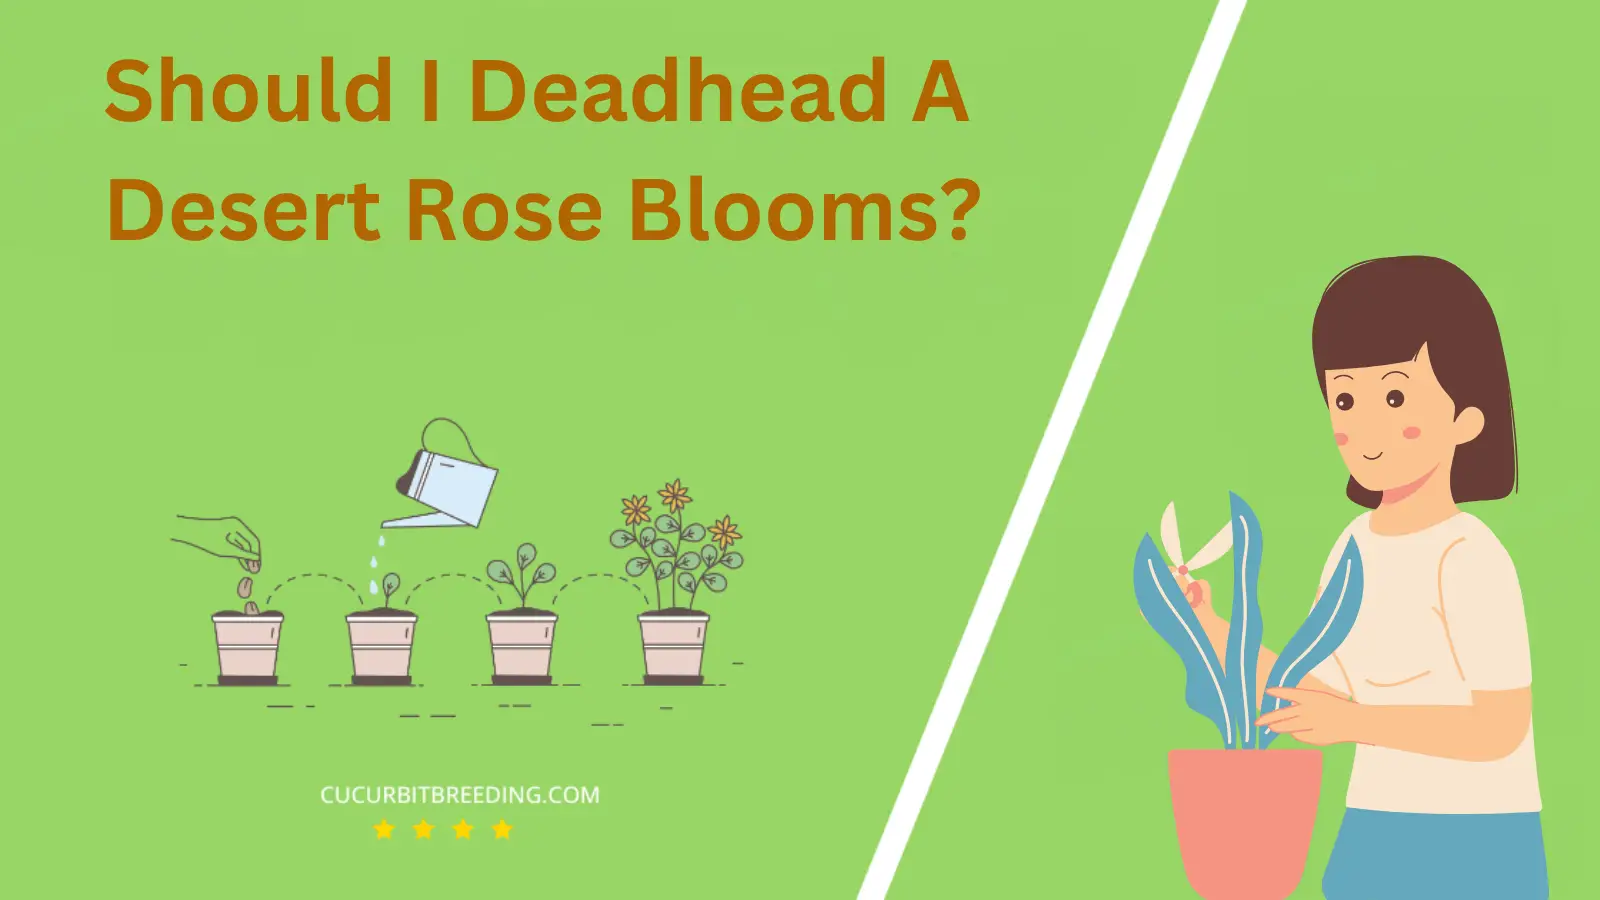 Should I Deadhead A Desert Rose Blooms?